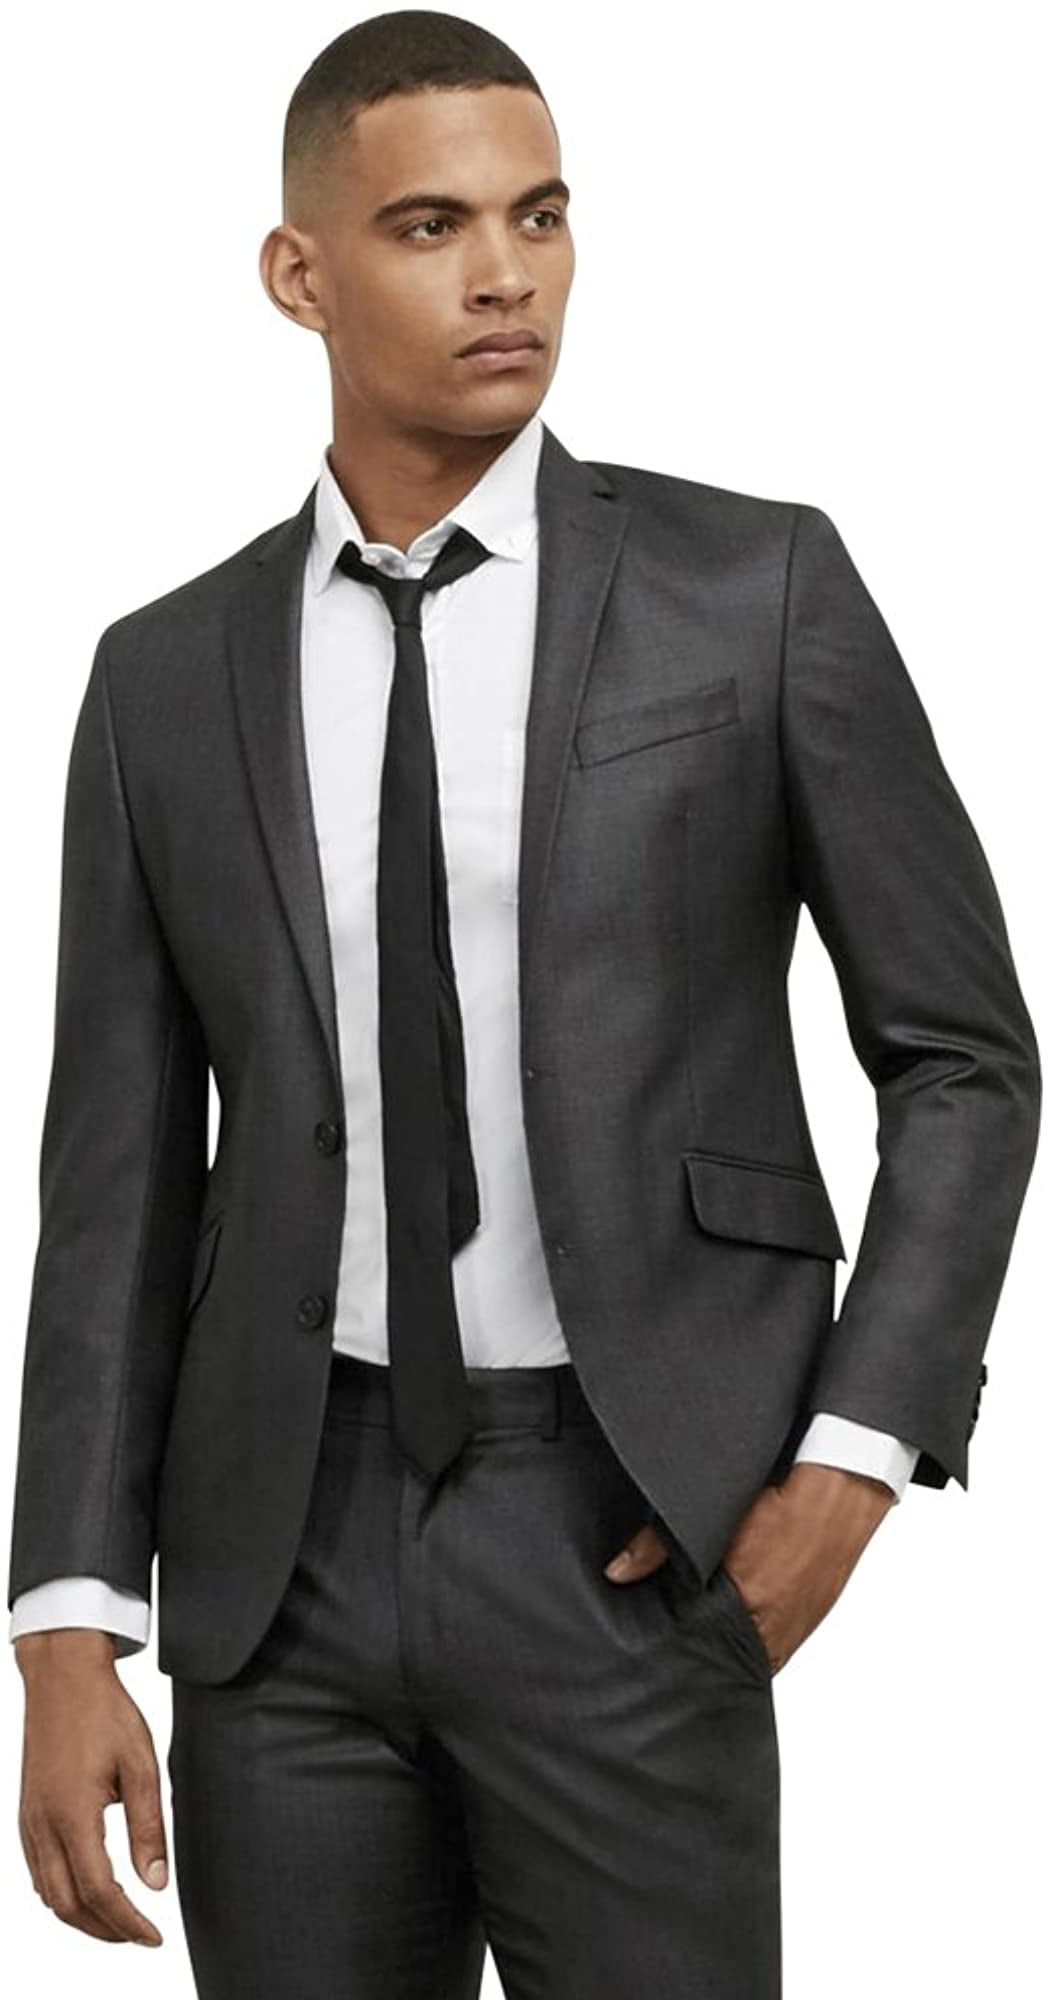 Blazer, Pant, and Vest Kenneth Cole REACTION Slim Fit Suit Separates 